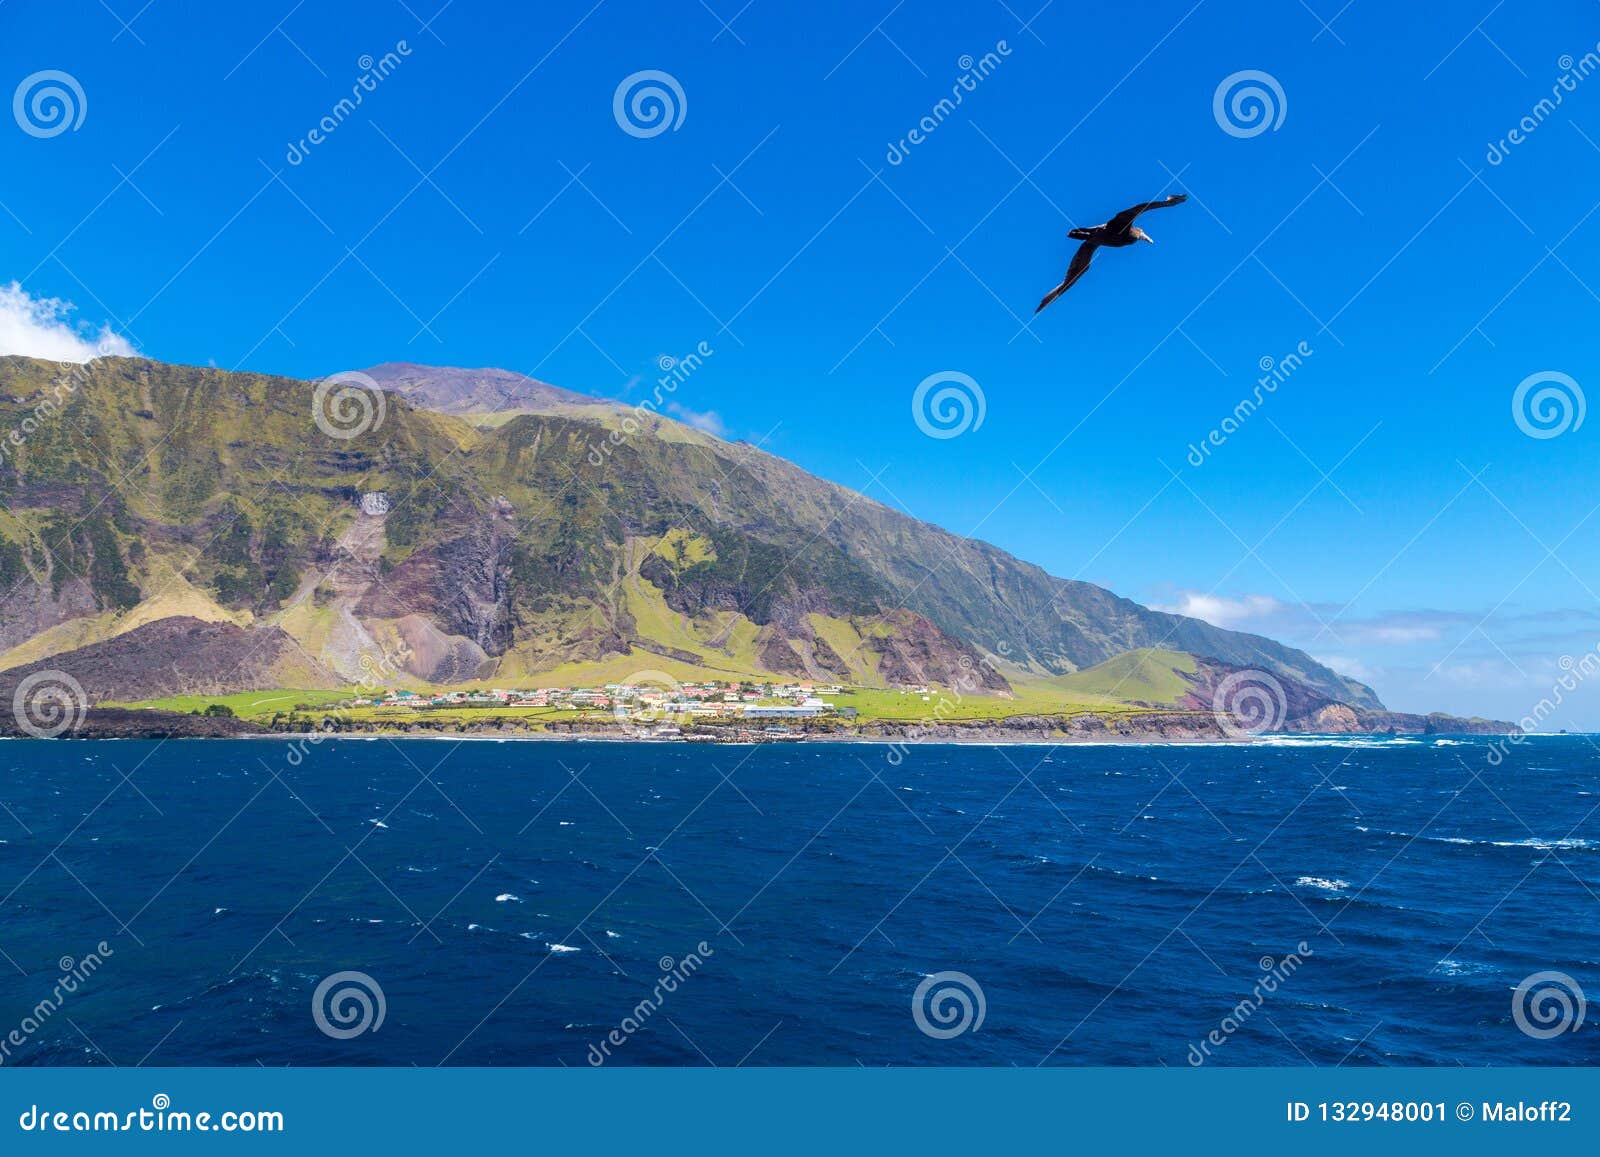 edinburgh of the seven seas, tristan da cunha island. 1961volcano cone. seagull, cormorant or gannet on foreground.